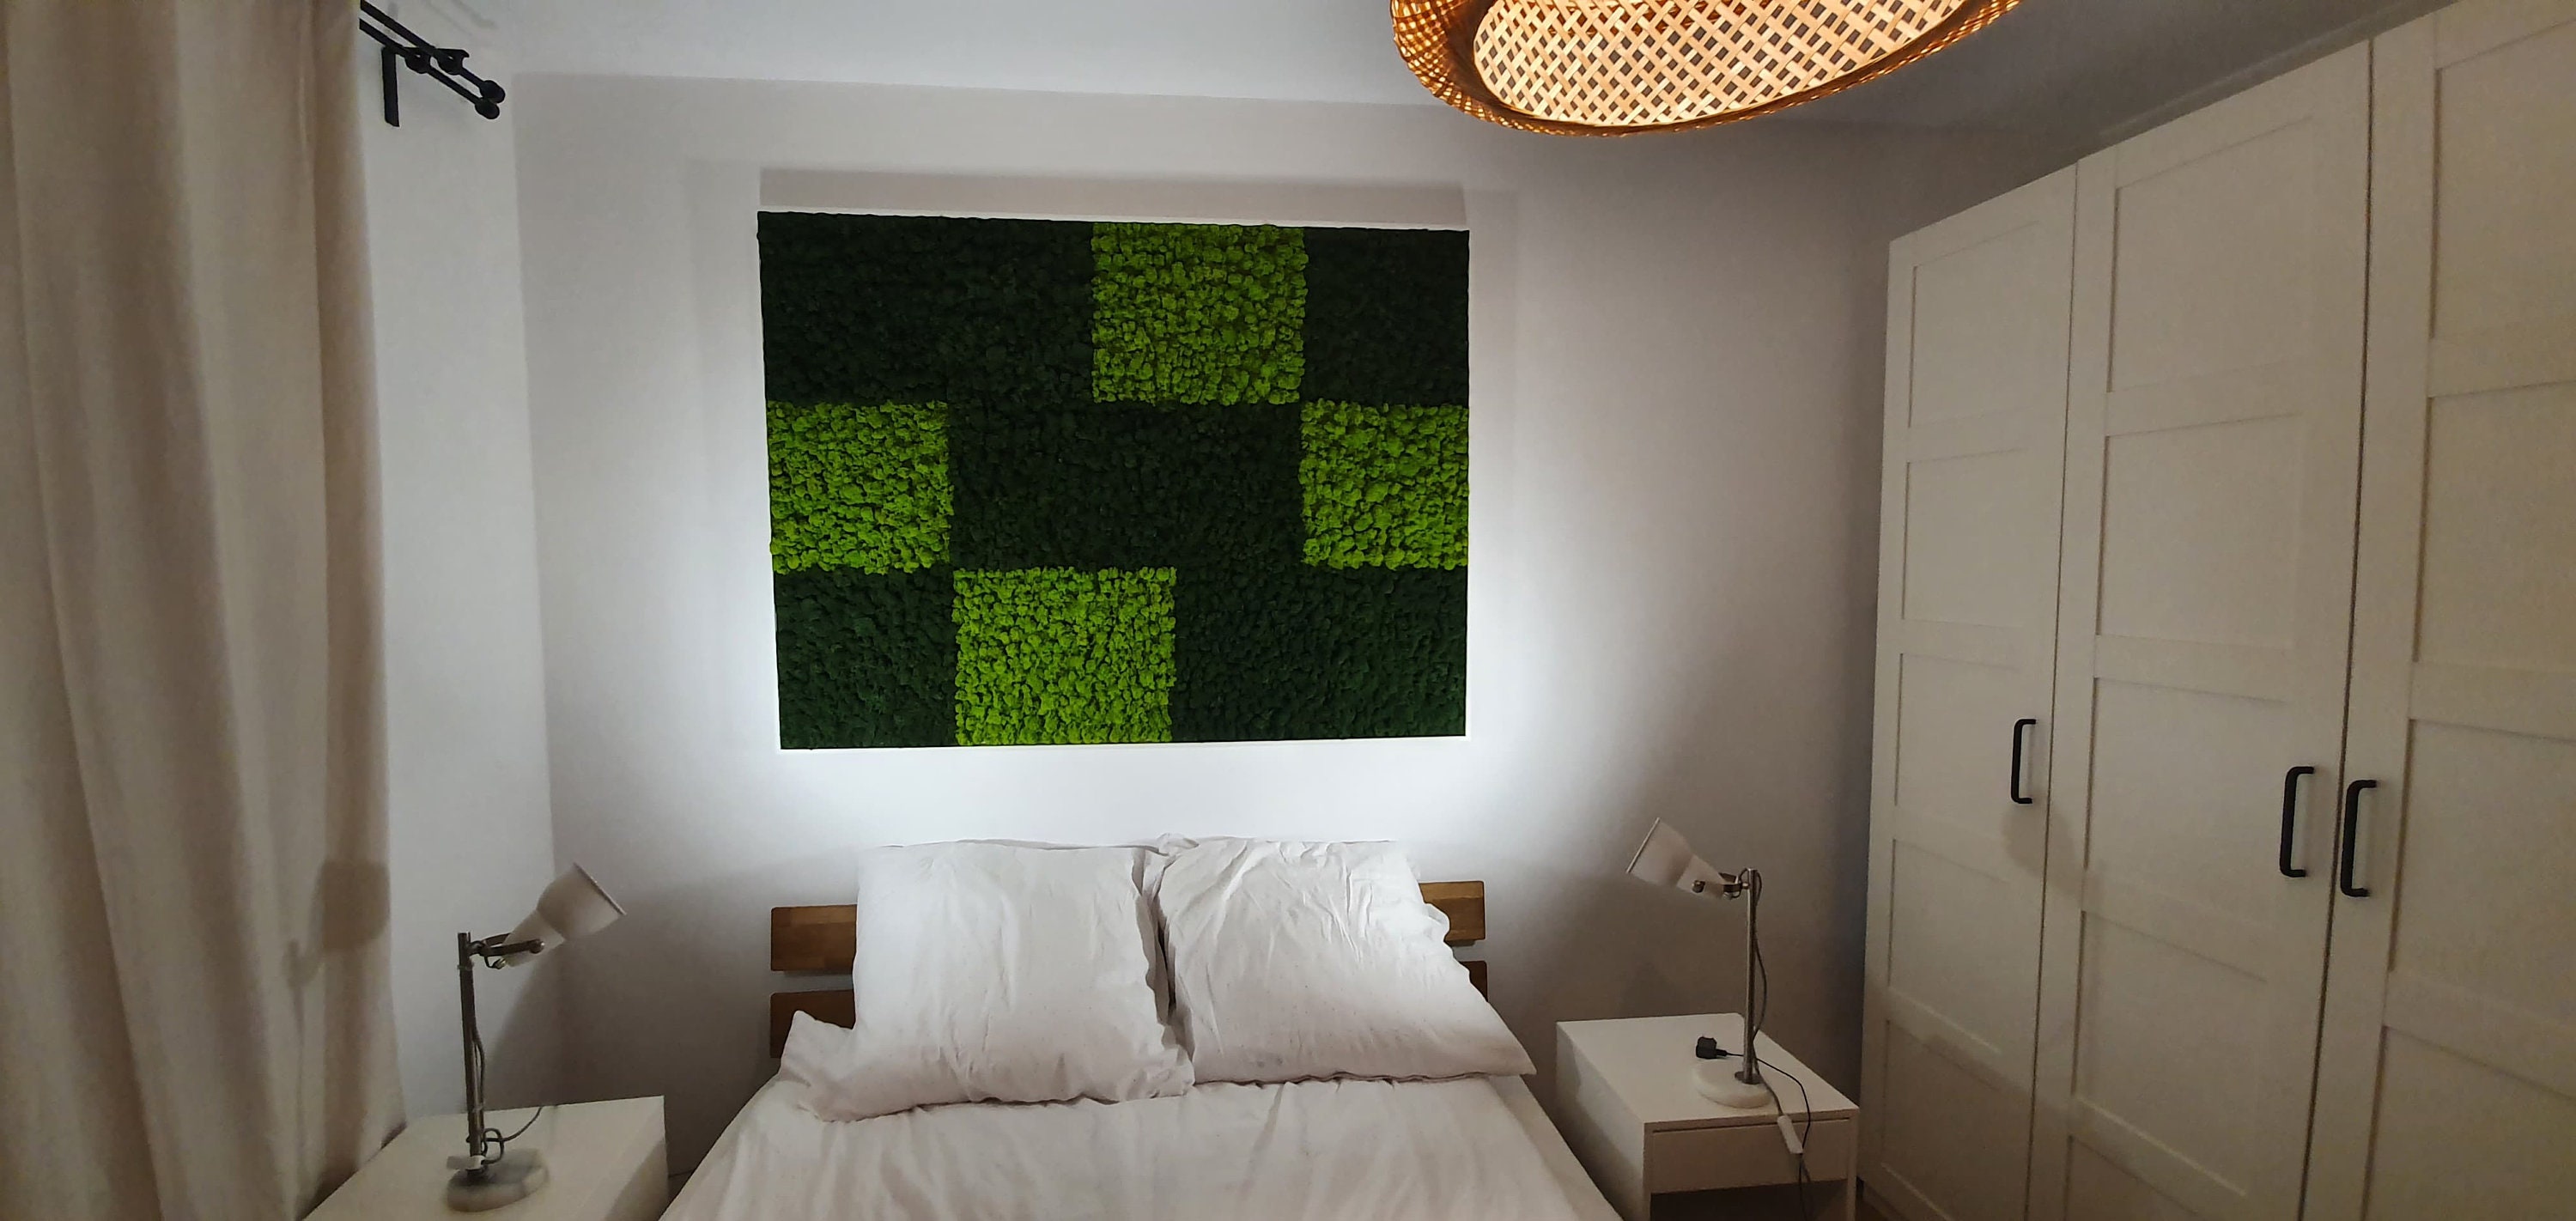 Large Moss Wall Art / Living Wall Art / House Jungle / Large Moss Frame /  Green Wall Decor / Maintenance-free Plant One Piece 50x100 Cm 